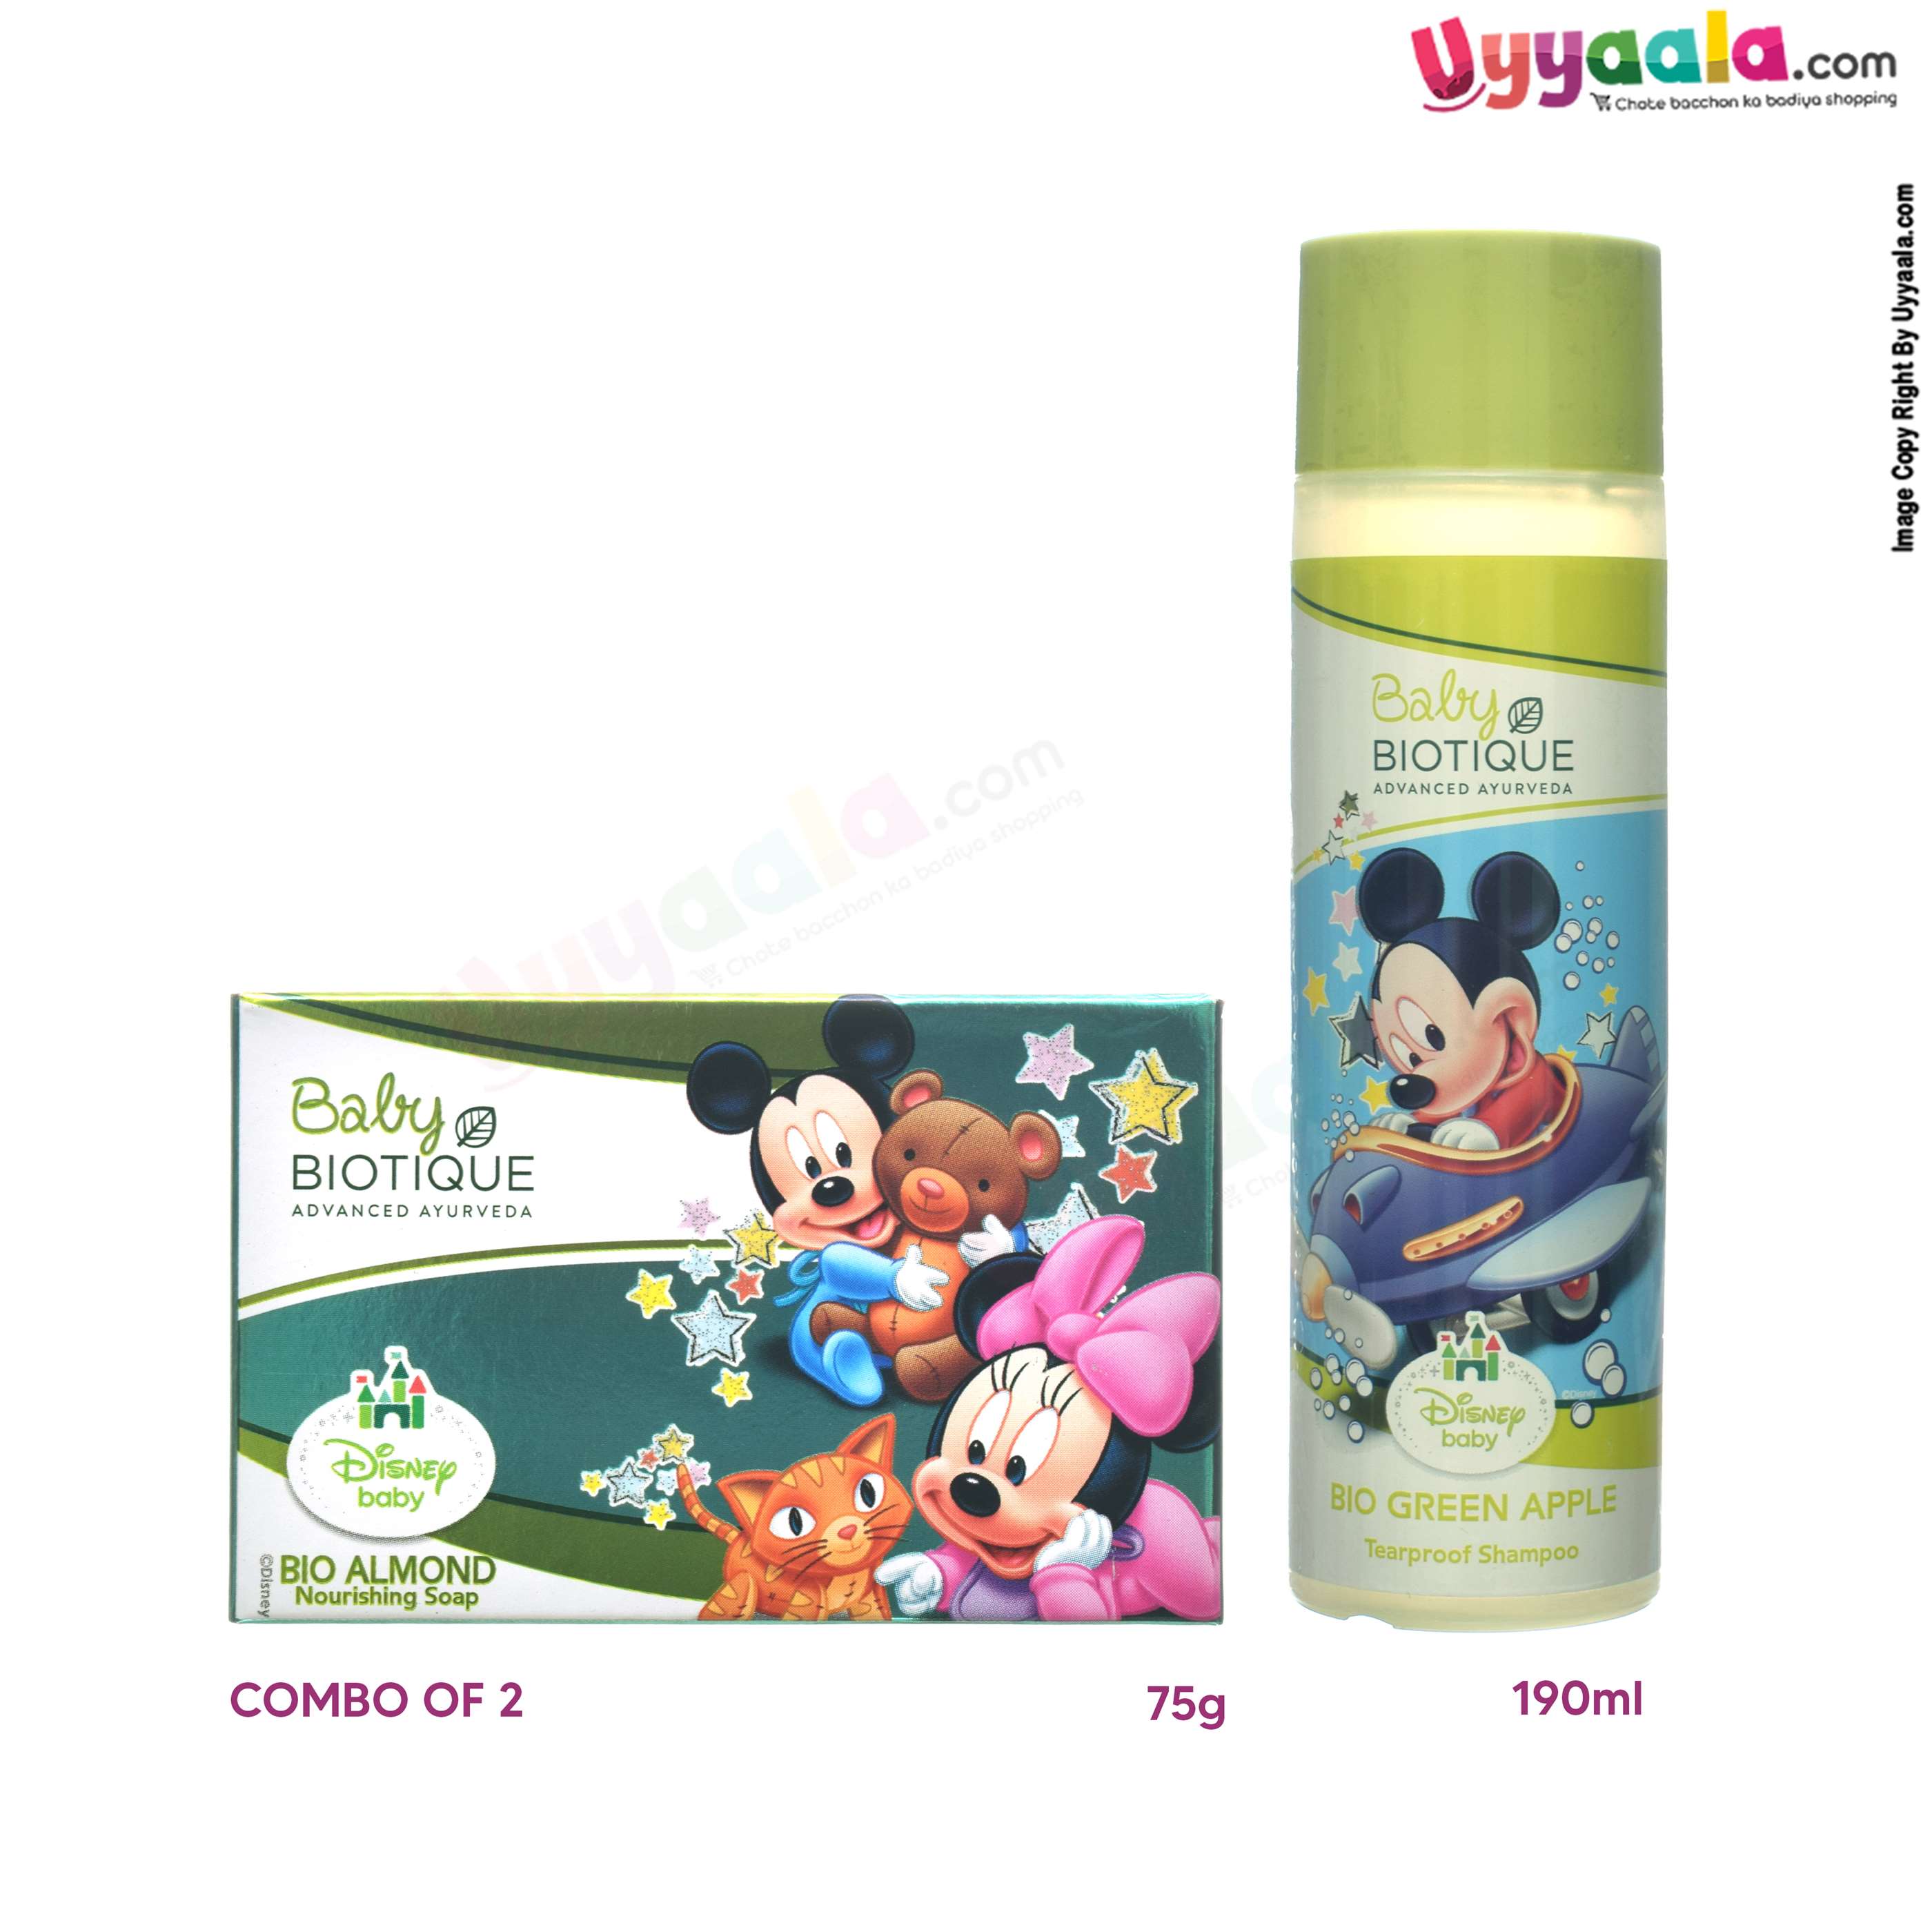 BABY BIOTIQUE Bio green apple tearproof shampoo 190ml & bio almond nourishing soap 75g